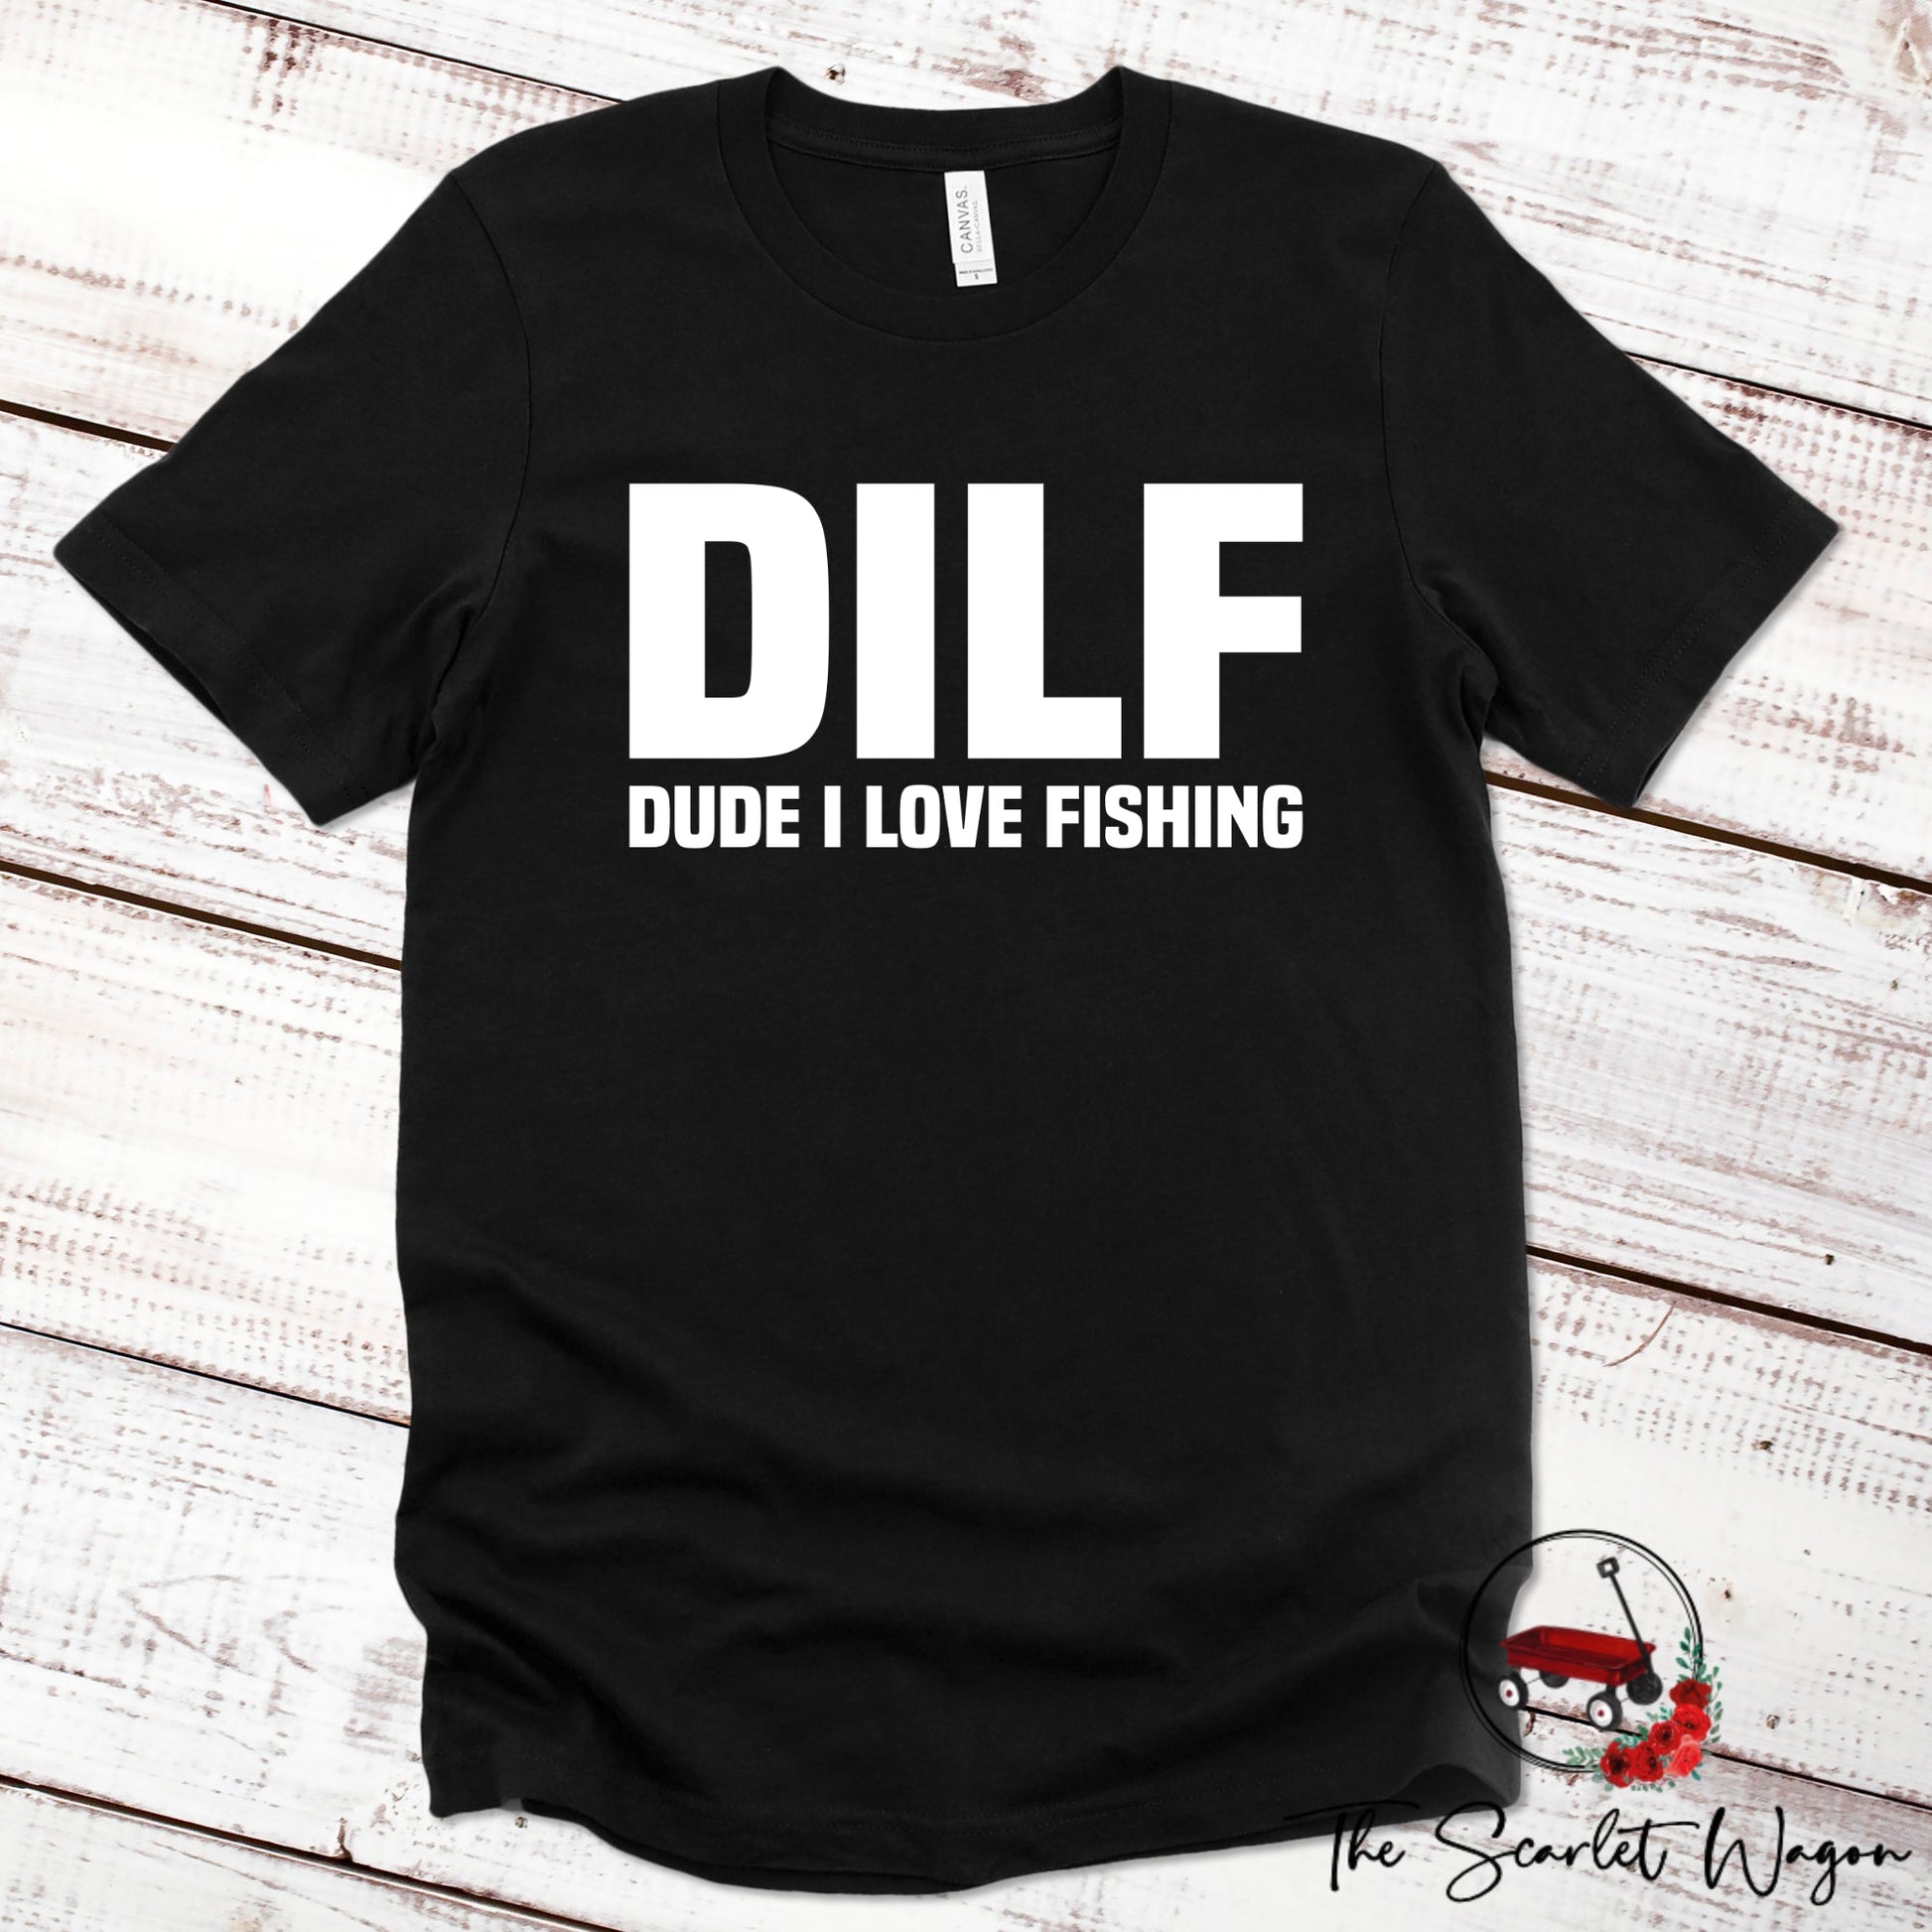 DILF - Dude I Love Fishing Premium Tee Scarlet Wagon Black XS 